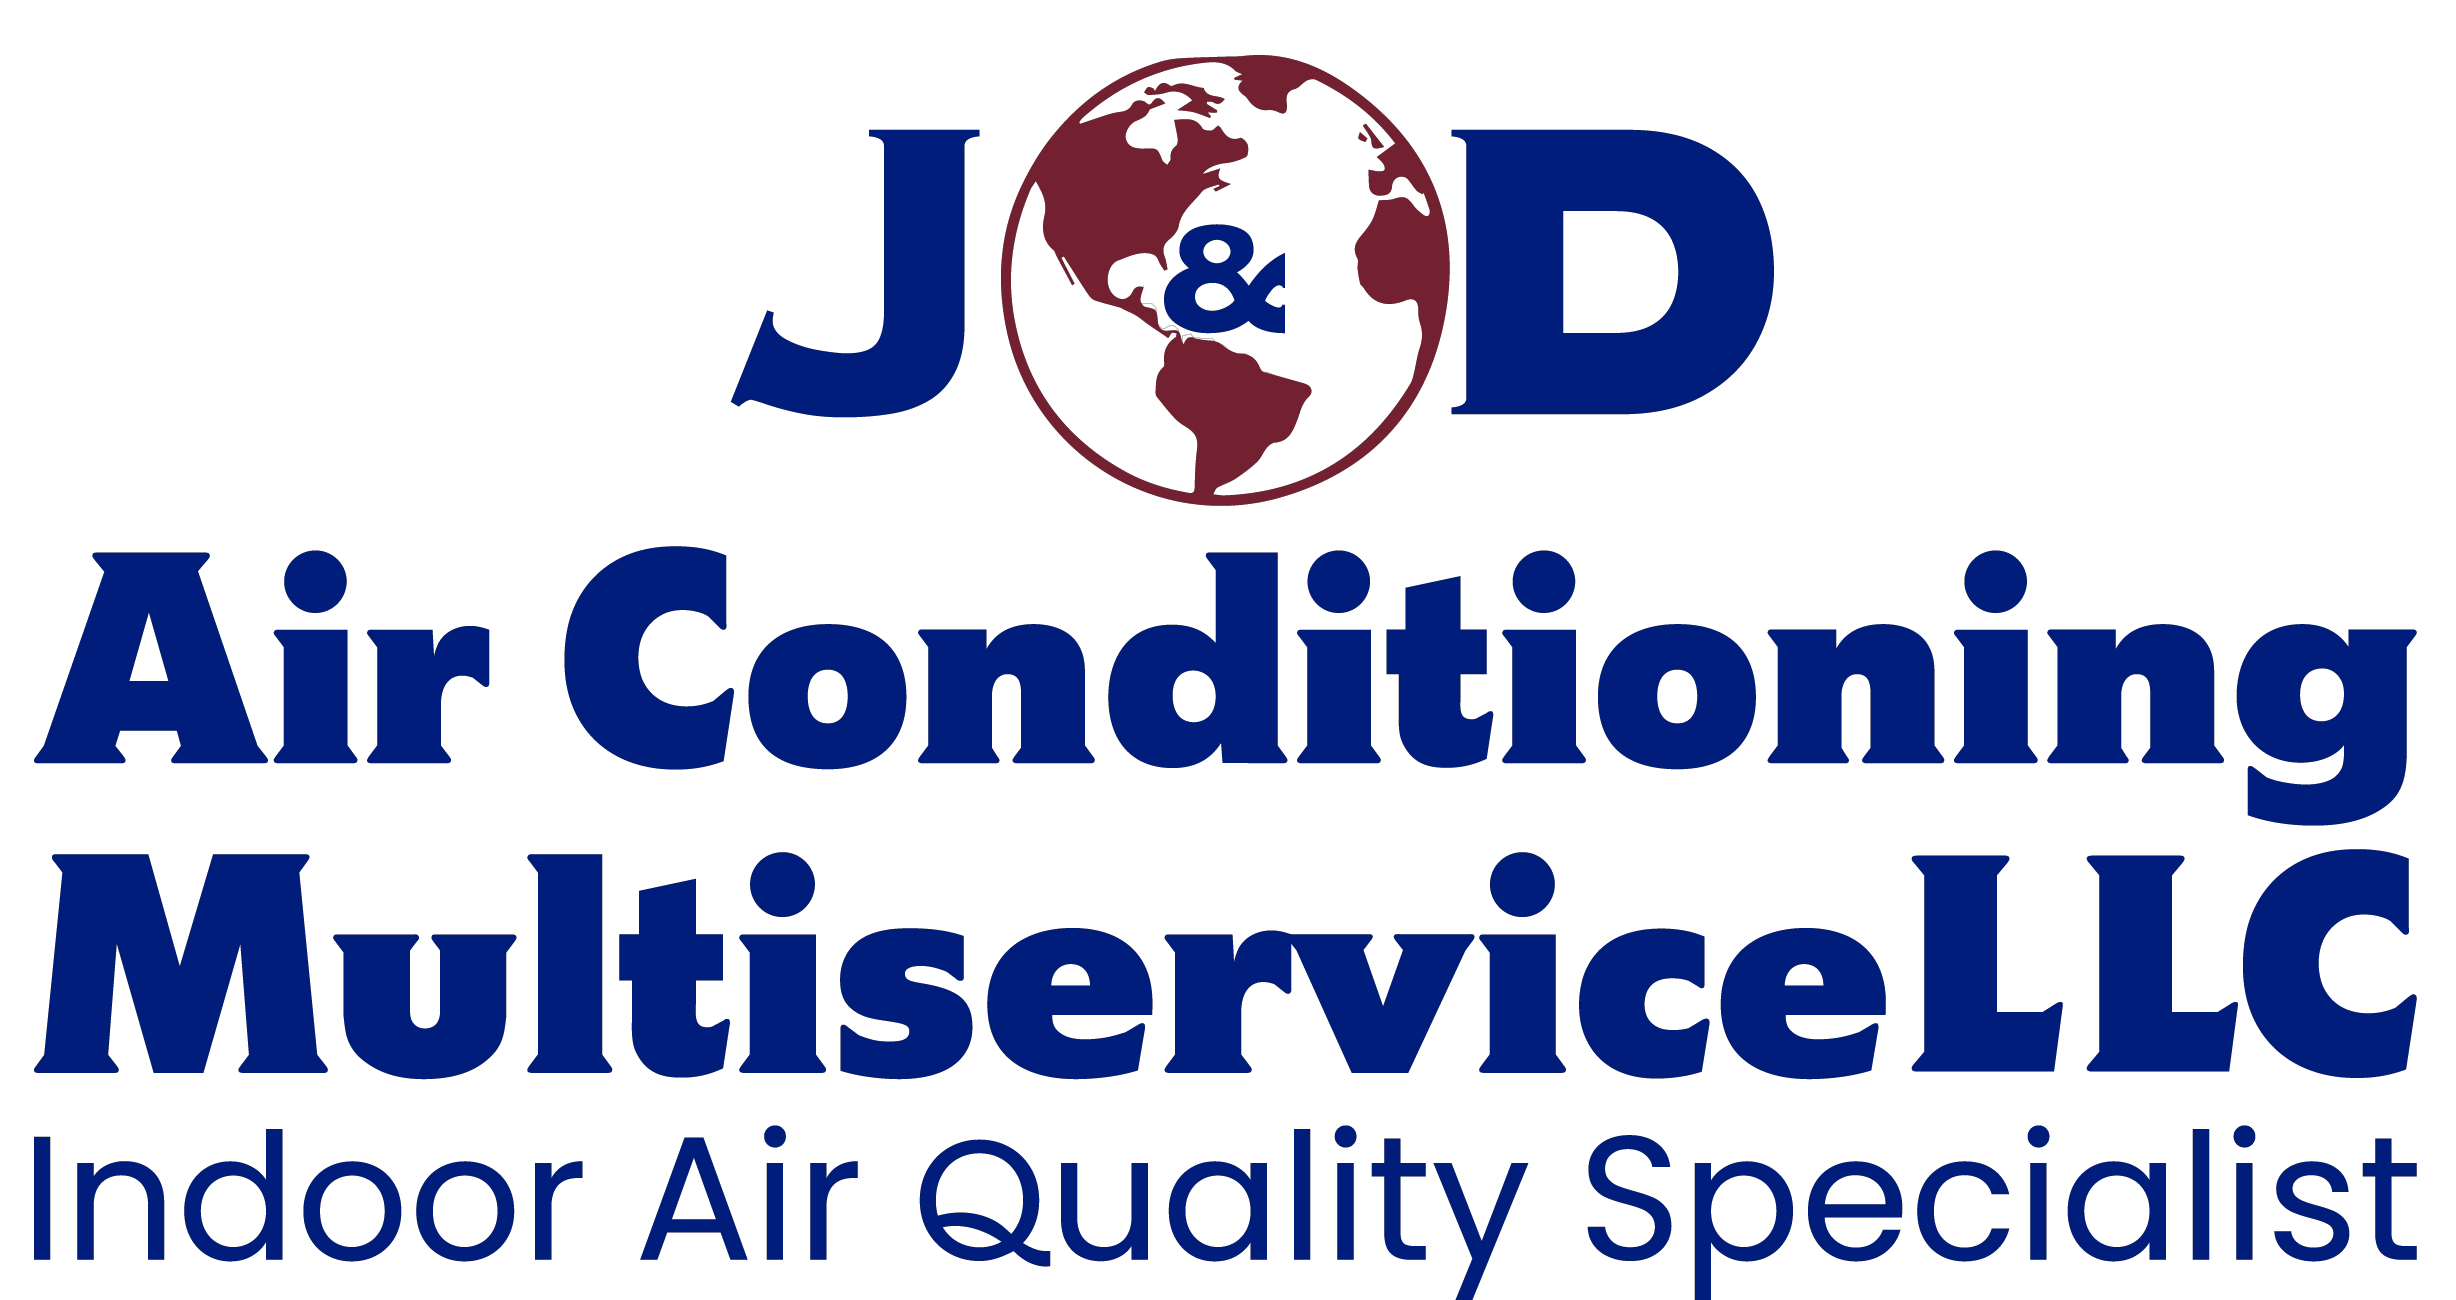 J&D Air Conditioning Multiservice LLC